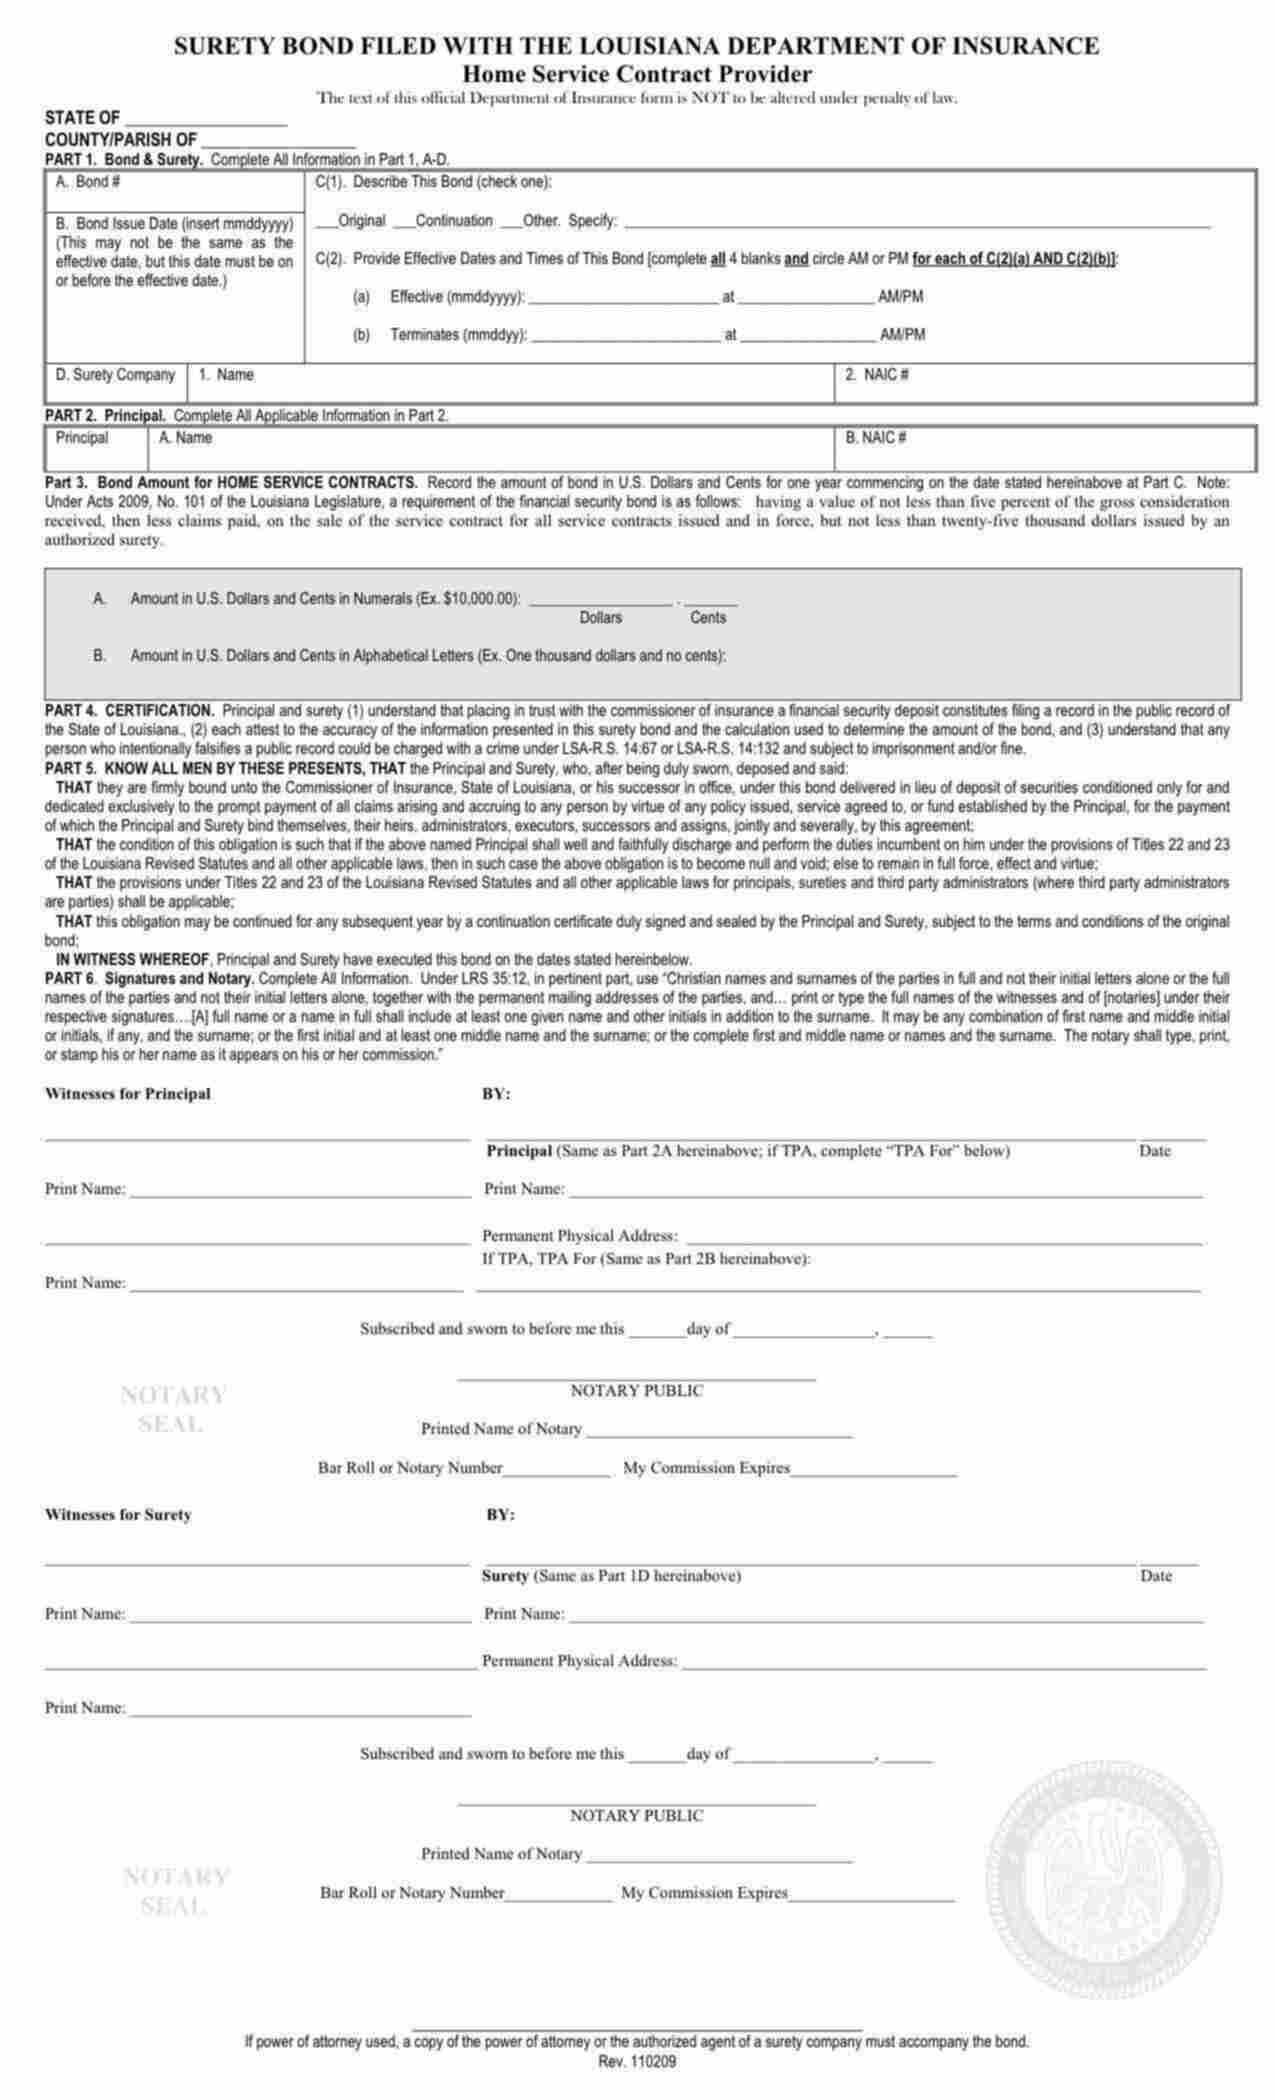 Louisiana Home Service Contract Provider Bond Form